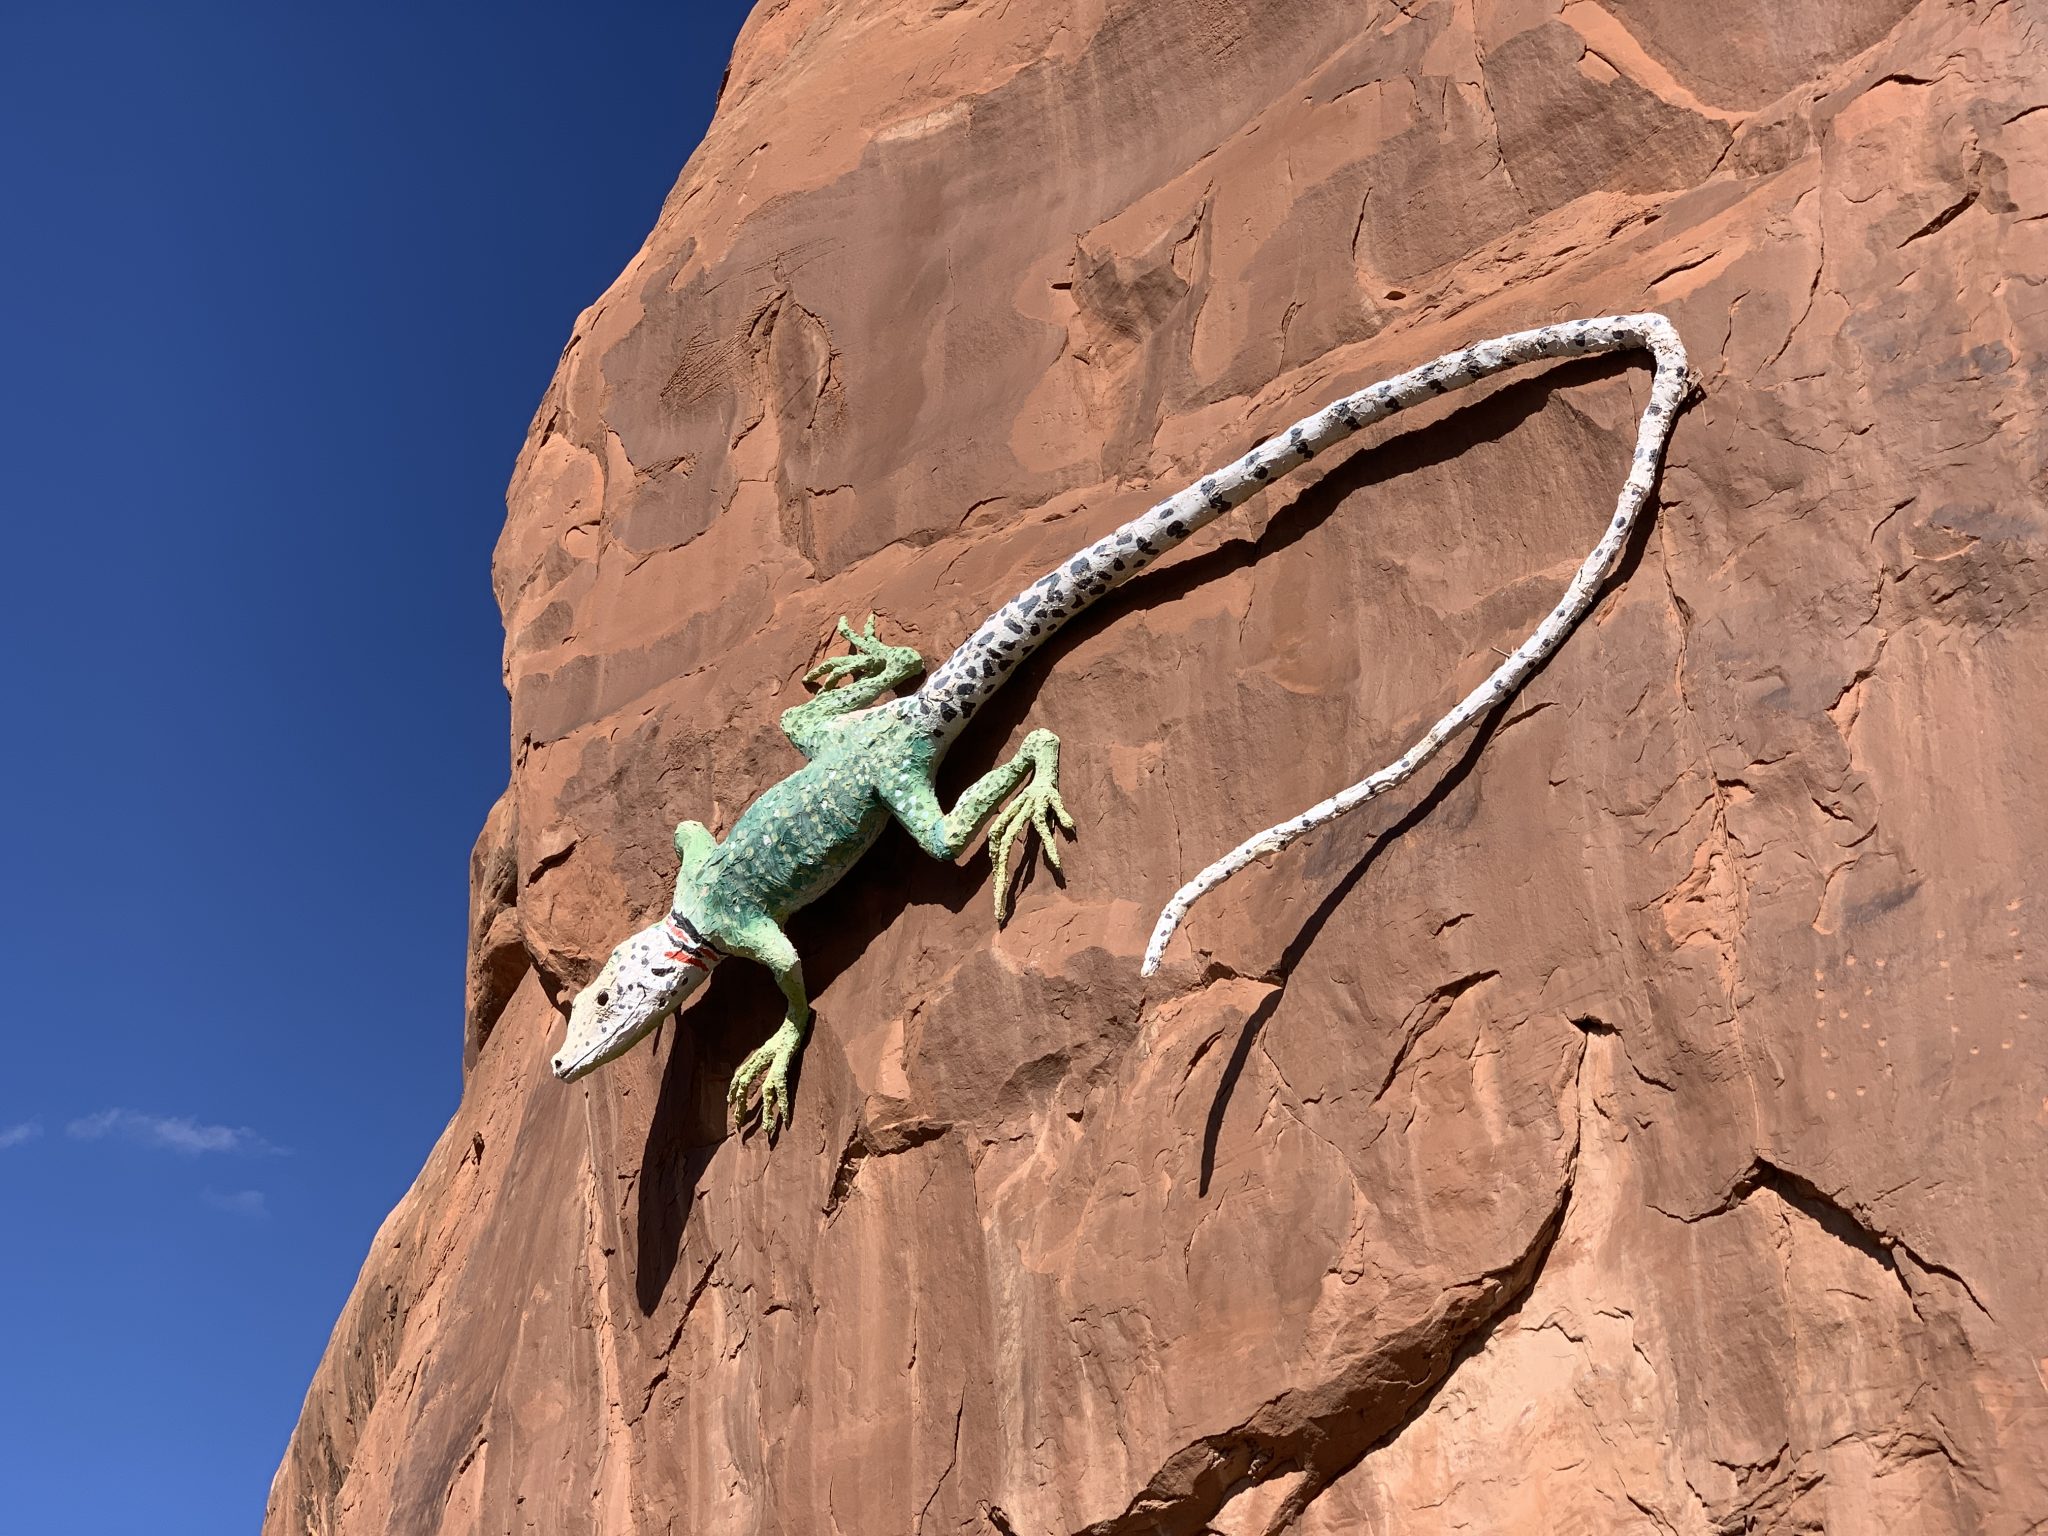 Lizard scultpure on a rock cliff